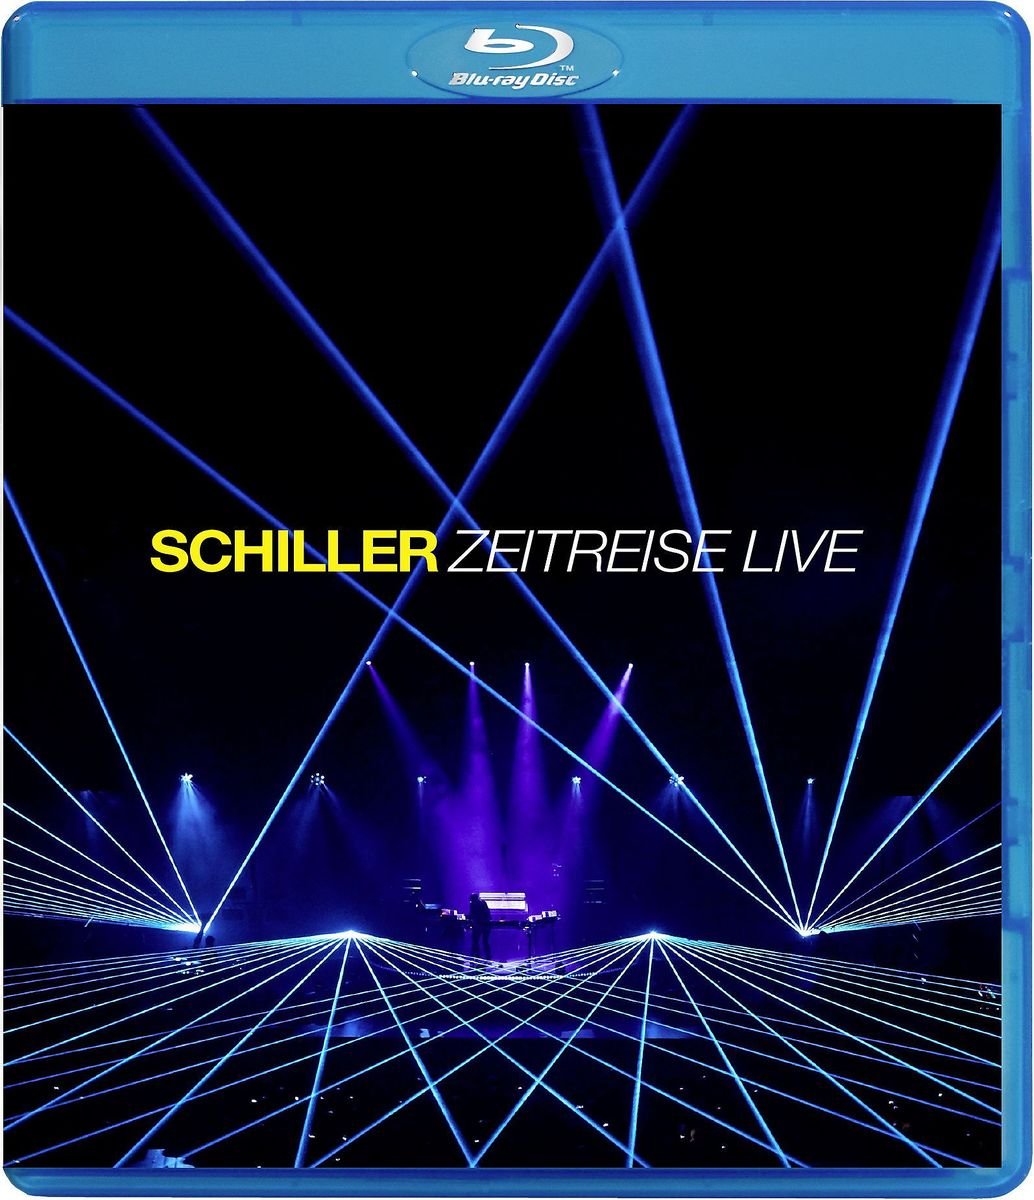 Buy the Zeitreise Live Blu-Ray here: